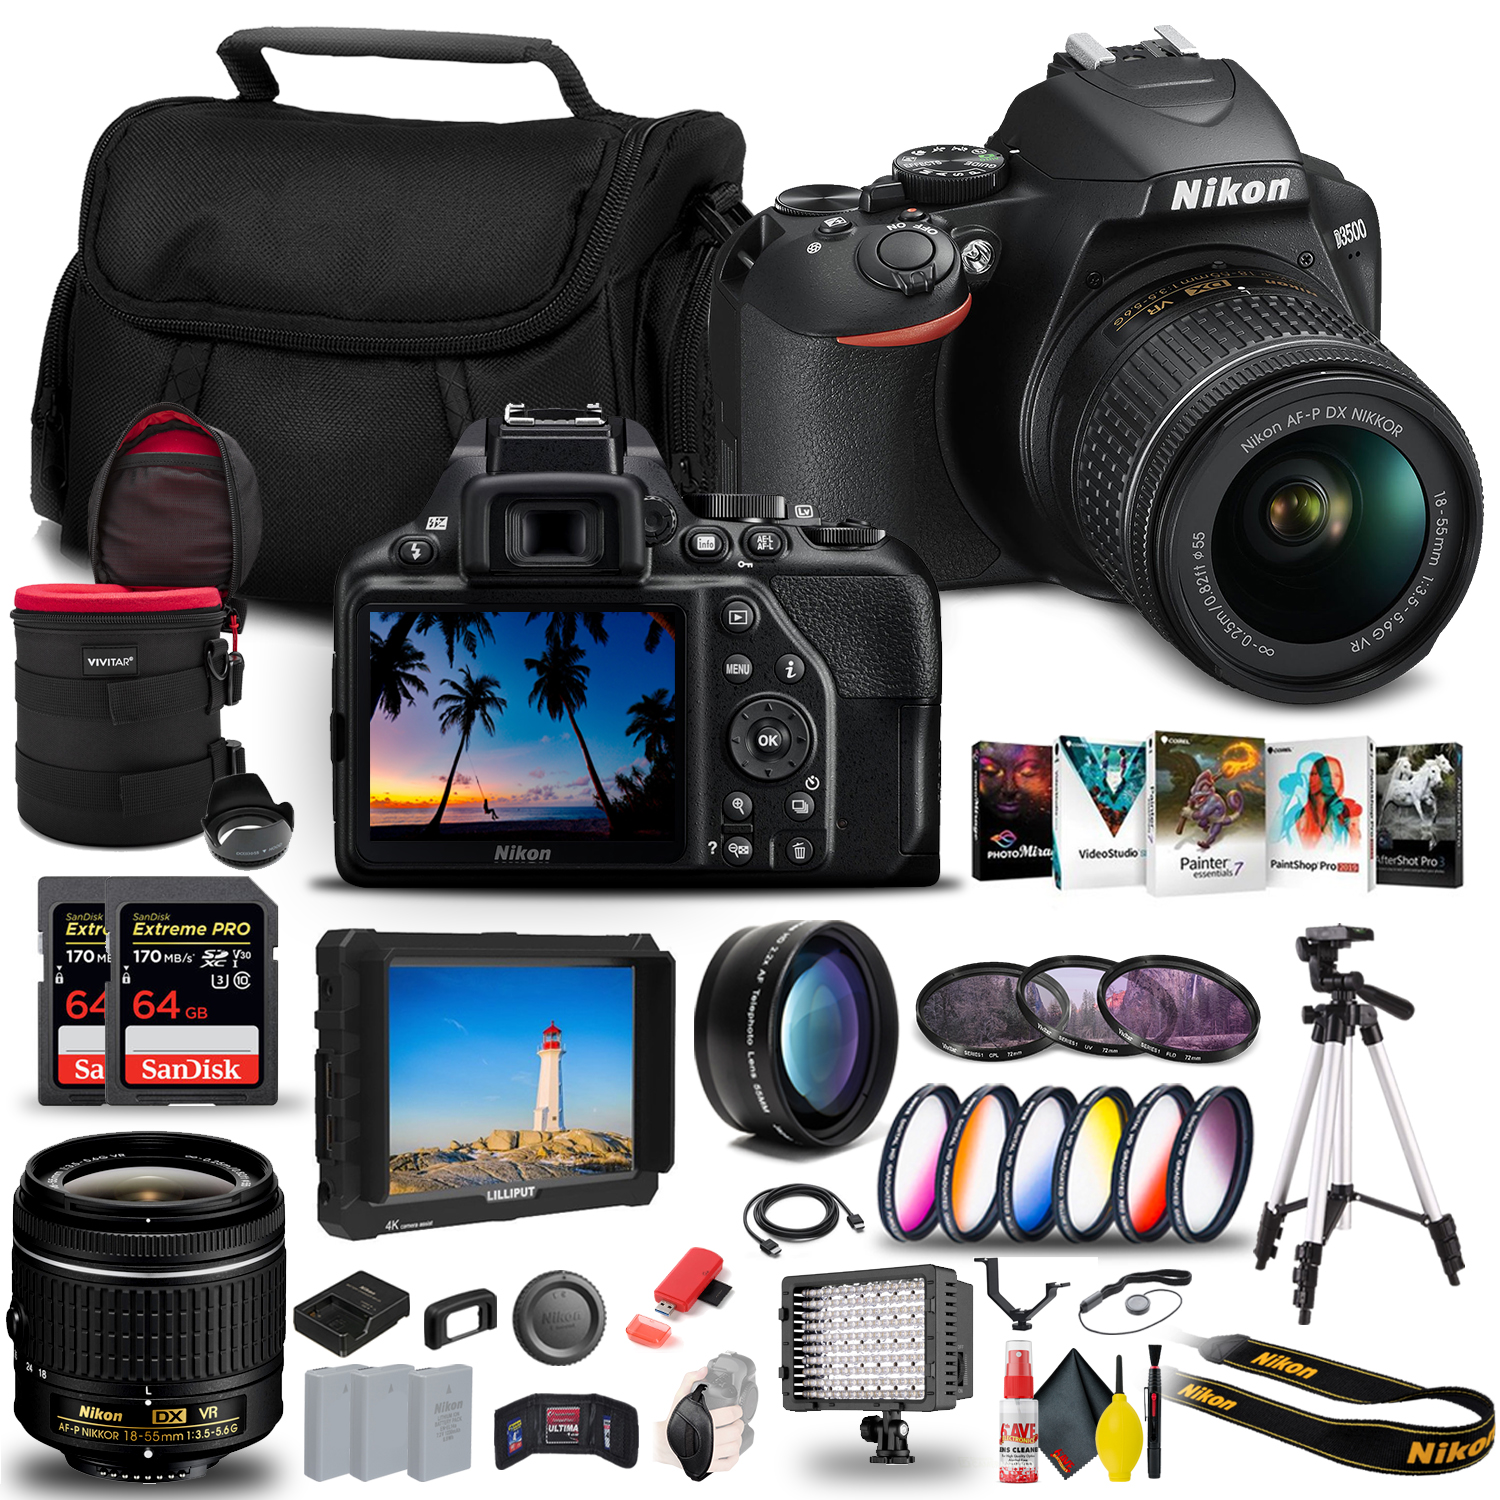 Nikon D3500 DSLR Camera with 18-55mm Lens (1590) + 4K Monitor + 2 x 64GB Extreme Pro Card + 2 x EN-EL14a Battery + Corel Photo Software + Pro Tripod + Case + Filter Kit + More - International Model - image 1 of 7